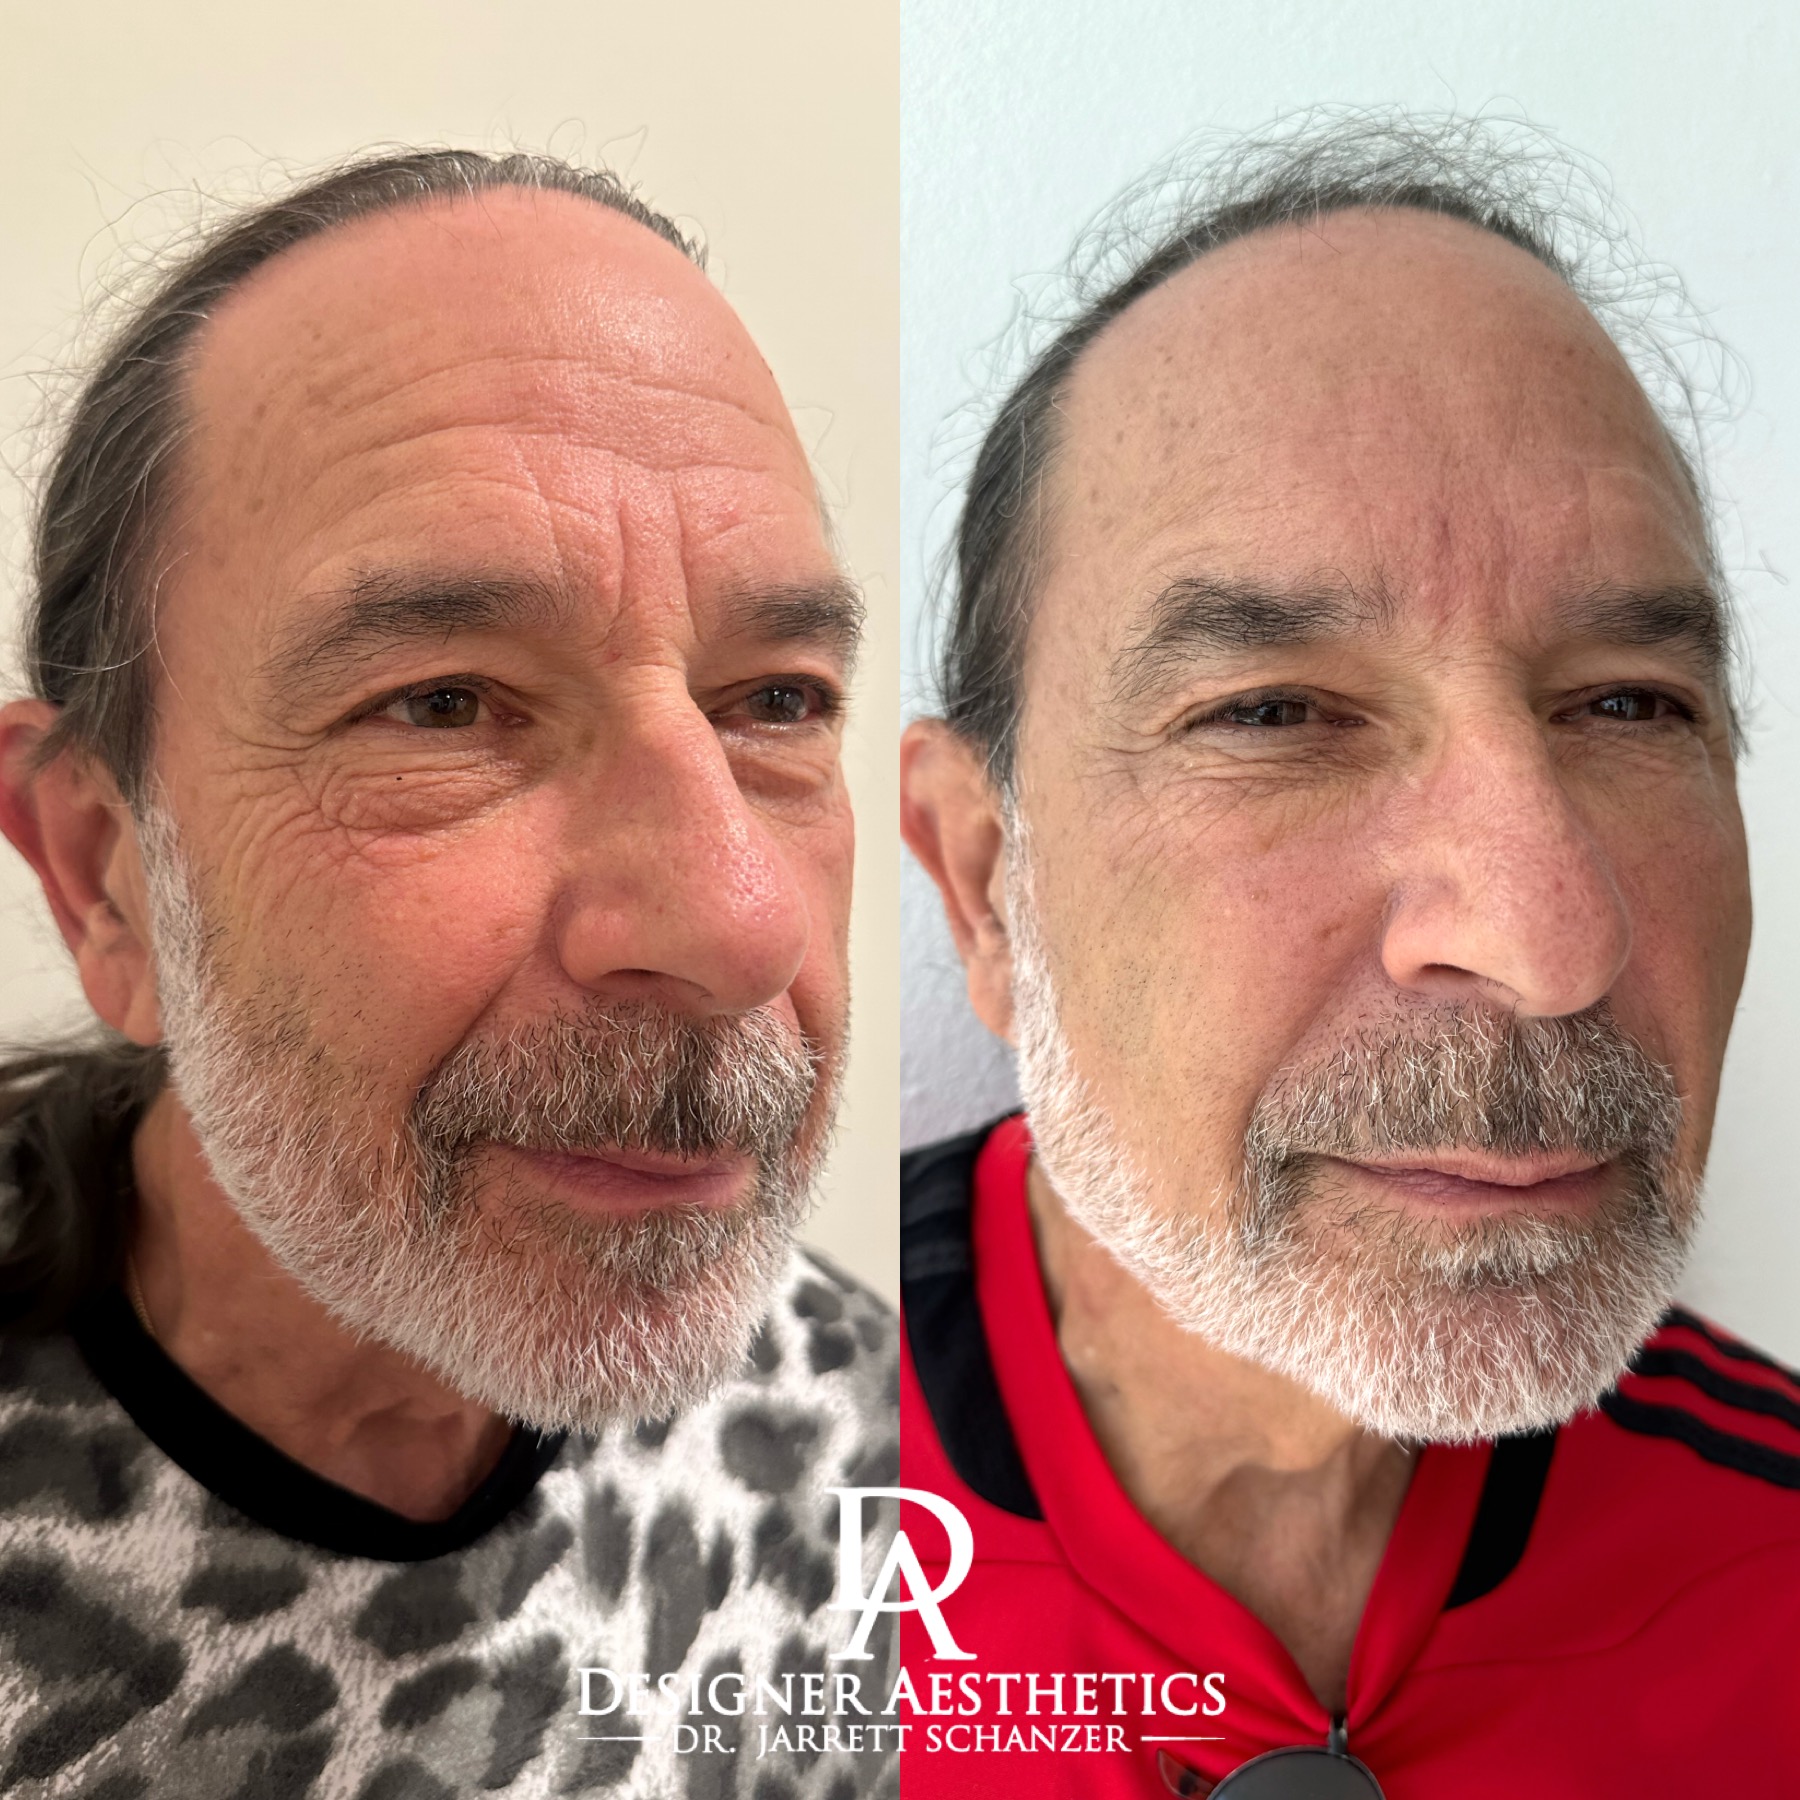 Facial Balancing Miami New york Doctor medspa aesthetics injections jarrett Schanzer